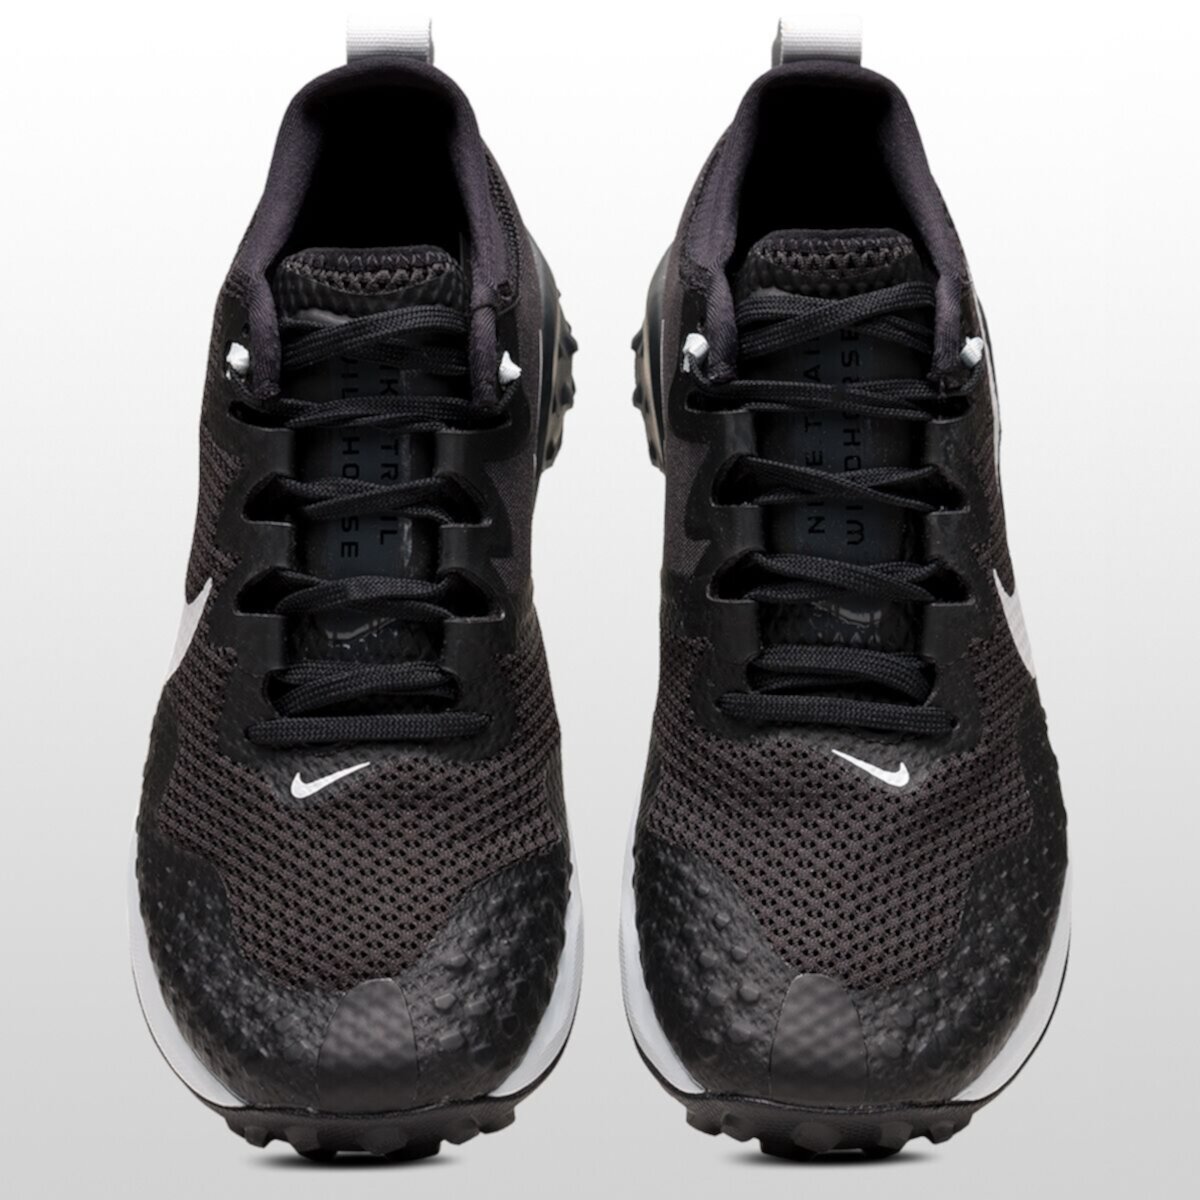 Кроссовки для трейлраннинга Wildhorse 7 Nike